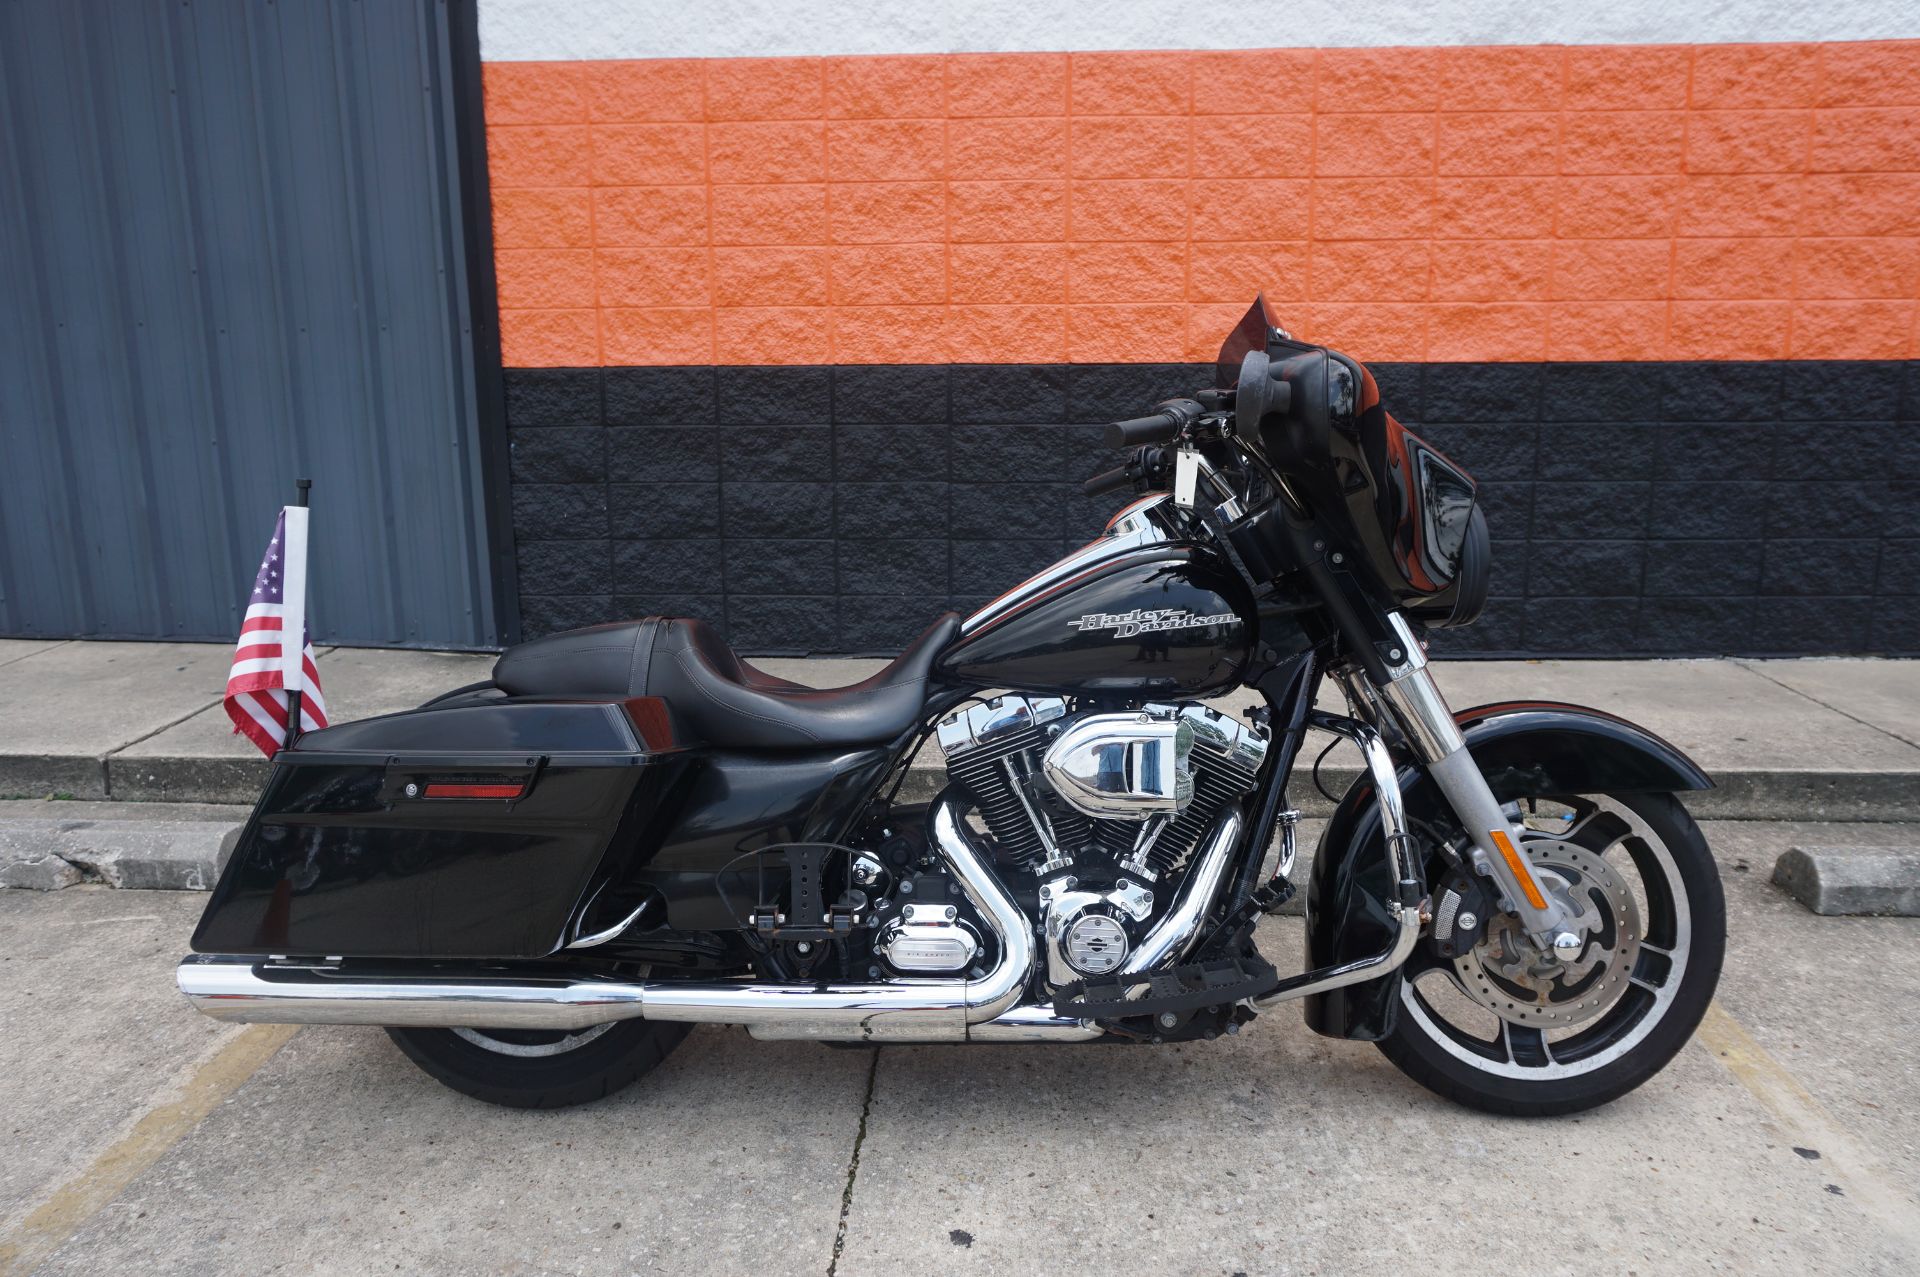 2013 Harley-Davidson Street Glide® in Metairie, Louisiana - Photo 1